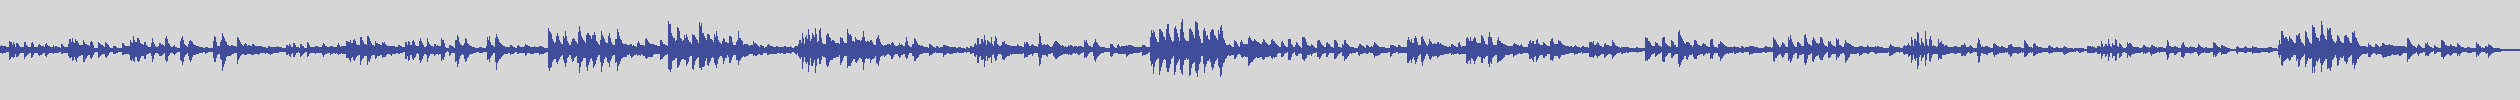 big_music_classic [BMC005] Erik Satie, Corrado Rossi - Gnossienne N.1 [] audio wave form